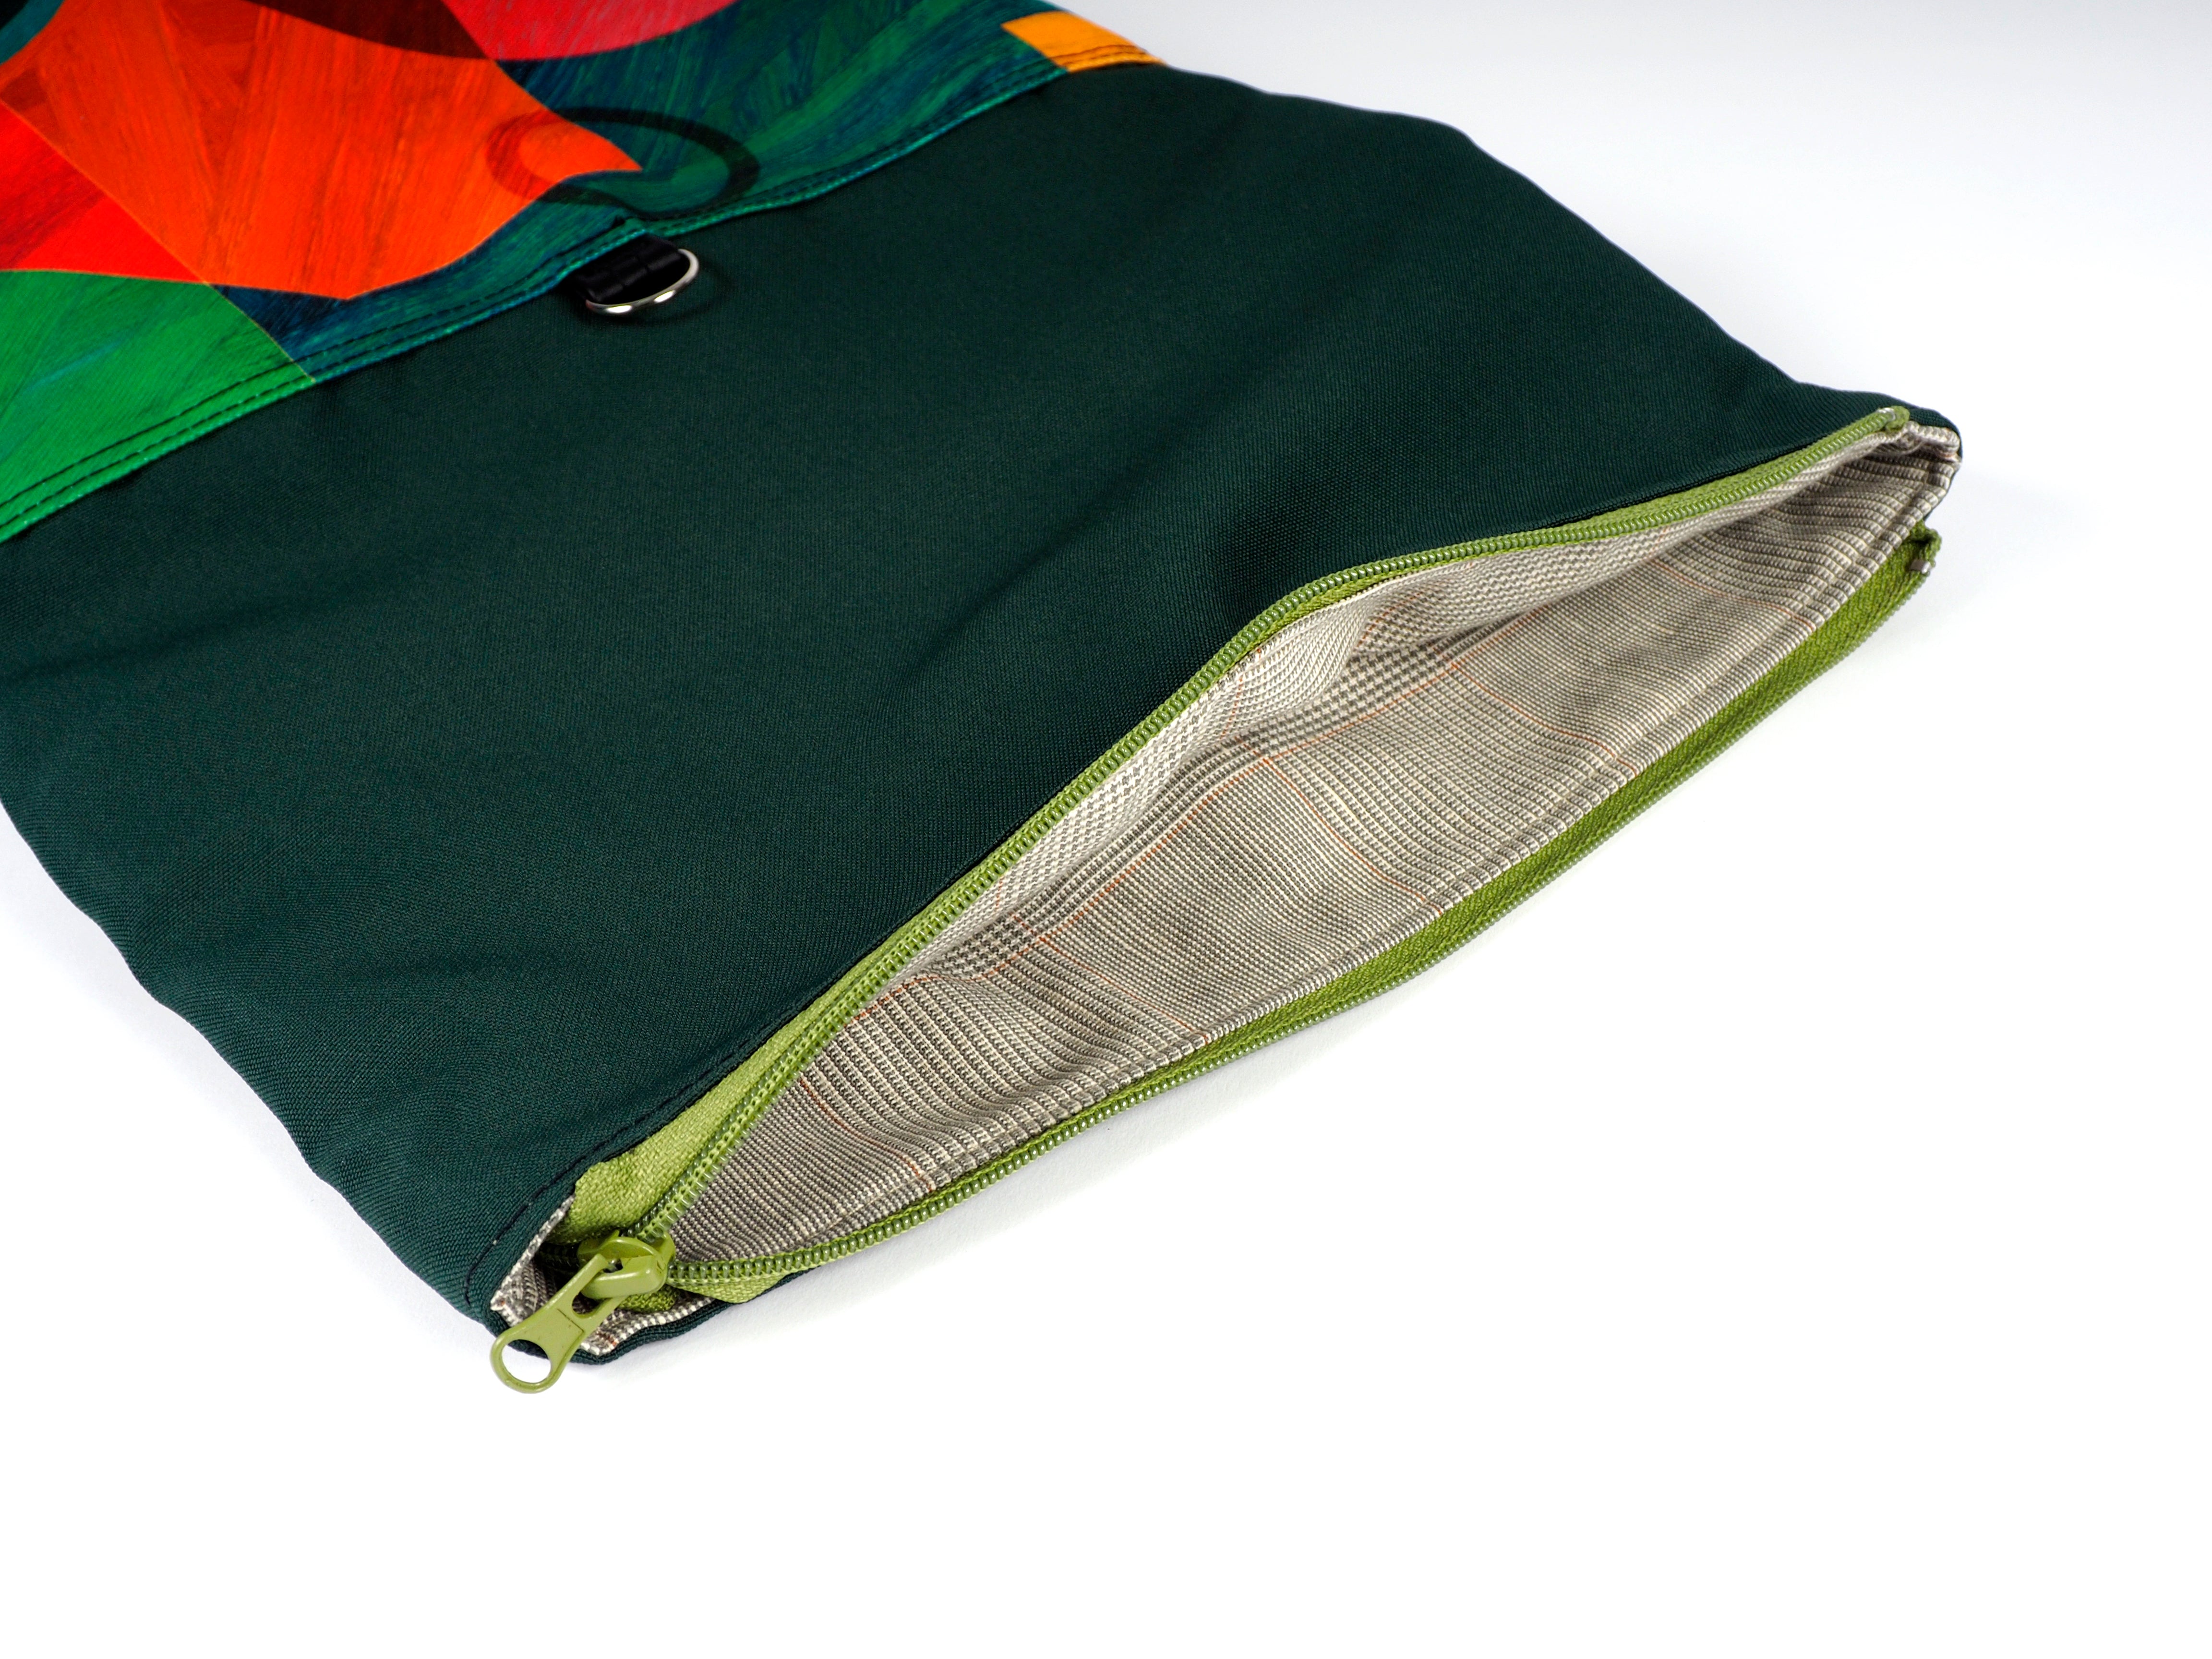 Bardo roll backpack - Green spring - Premium Bardo backpack from BARDO ART WORKS - Just lvabstract, art, backpack, black, dance, dark blue, gift, handemade, jazz, orange, purple, red, tablet, urban style, vegan leather, woman85.00! Shop now at BARDO ART WORKS